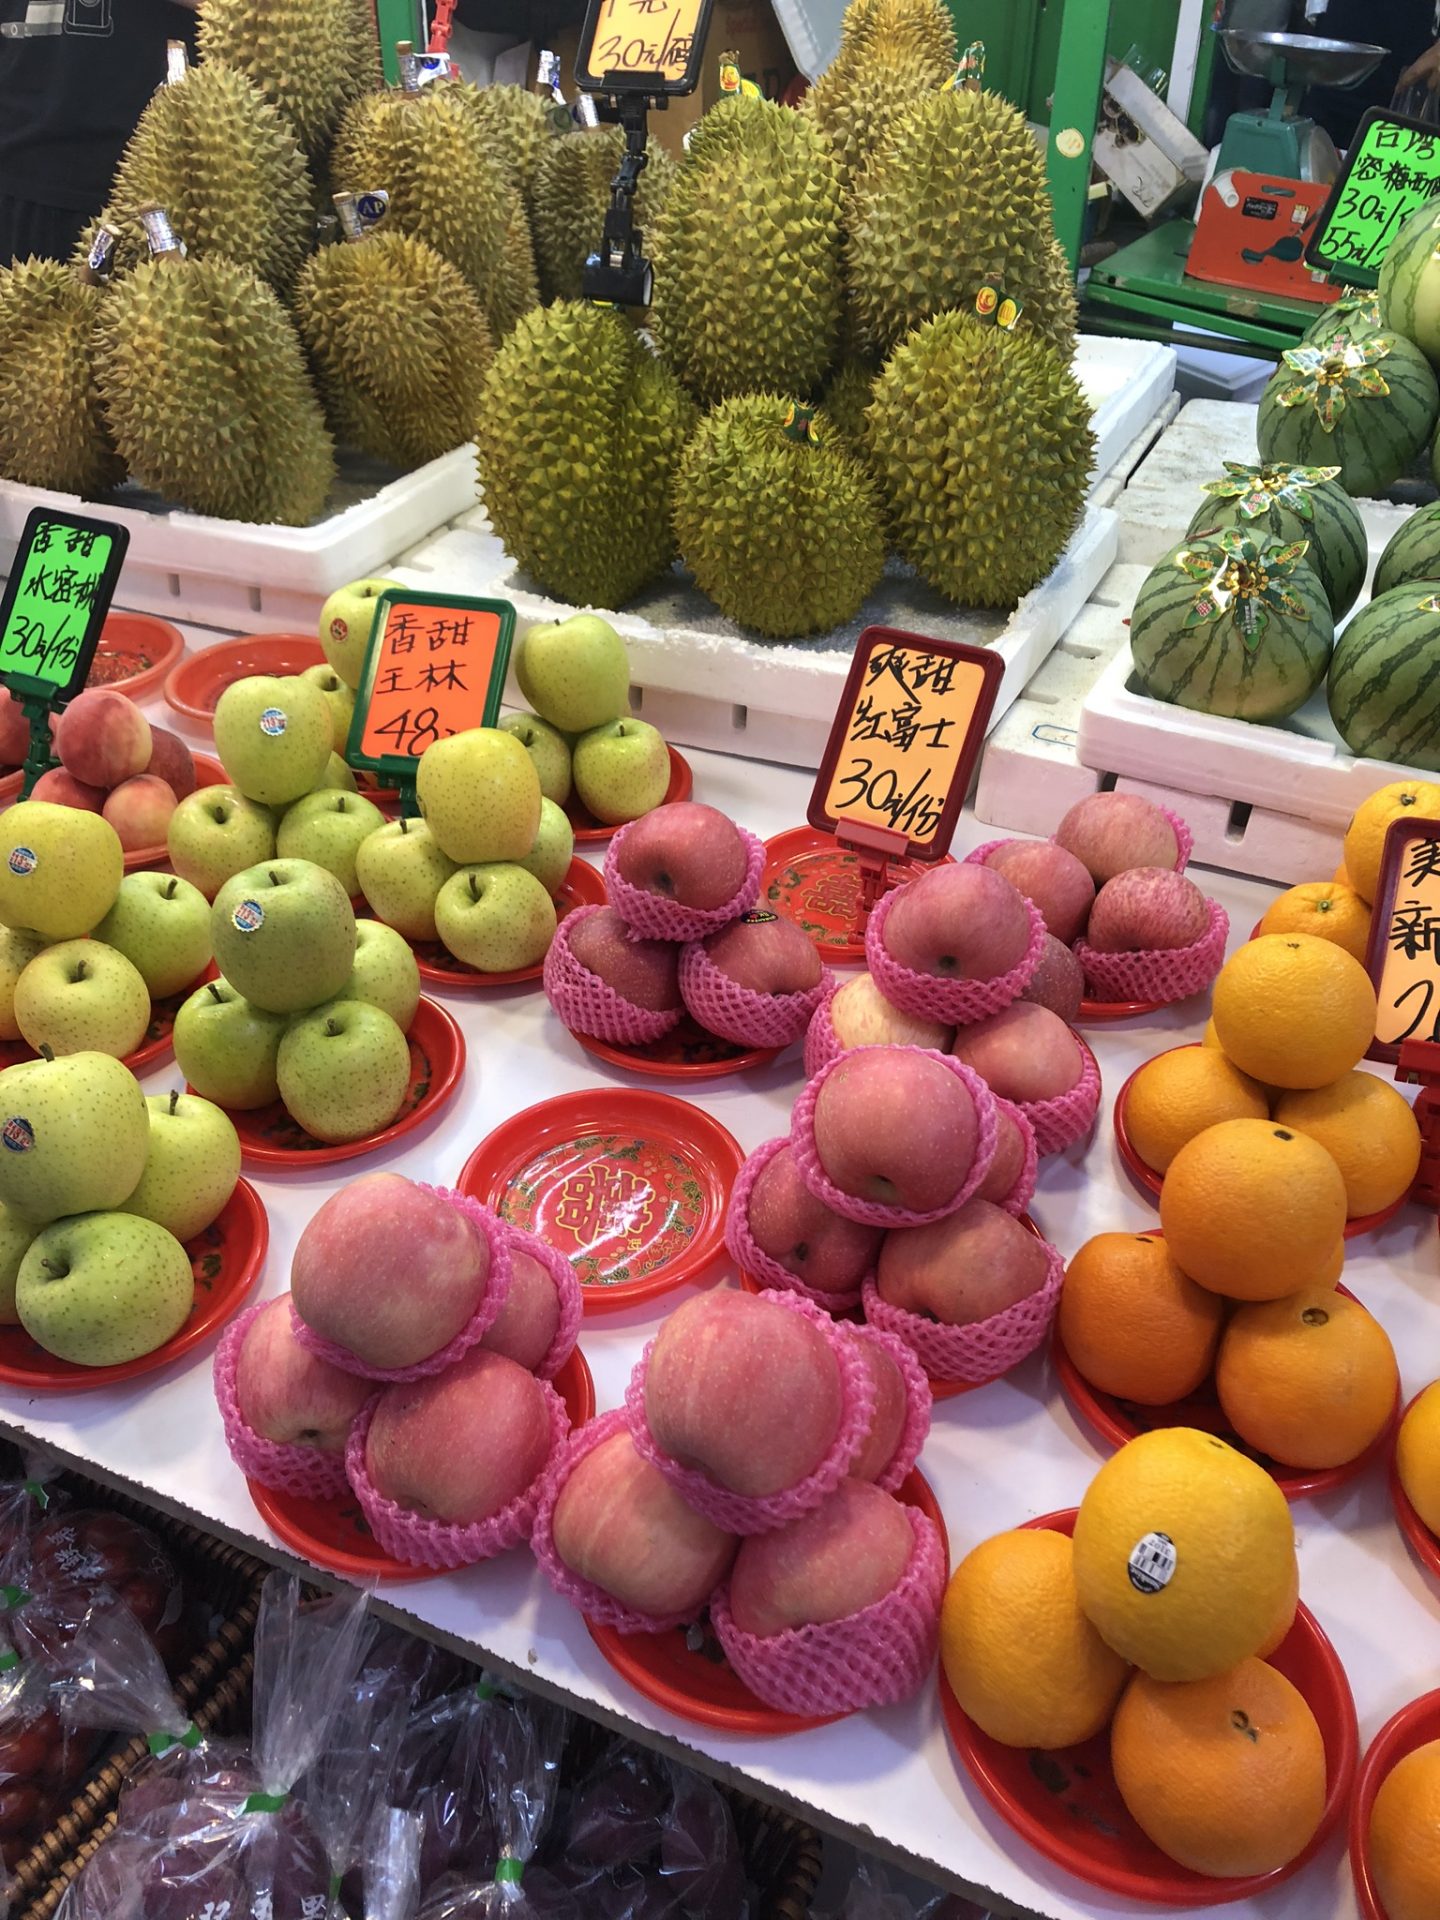 Fruit for sale in Mong Kok, Hong Kong